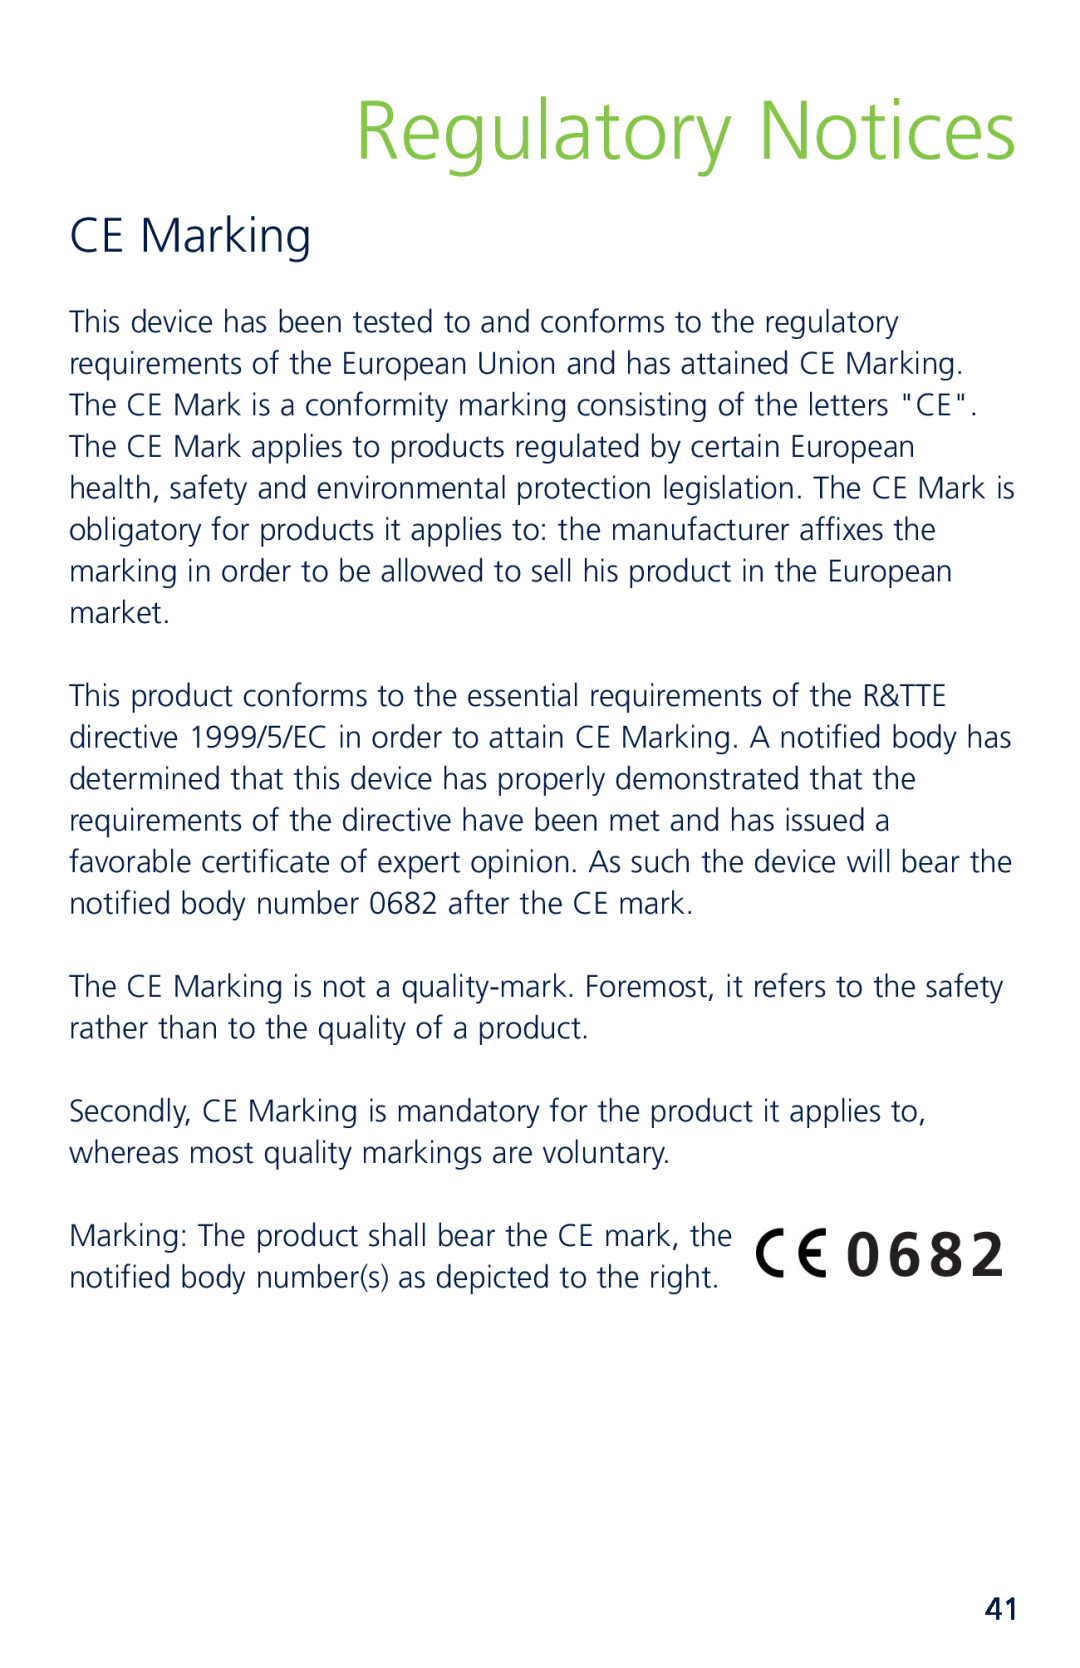 Novatel XU870 manual Regulatory Notices, CE Marking, 0 6 8 